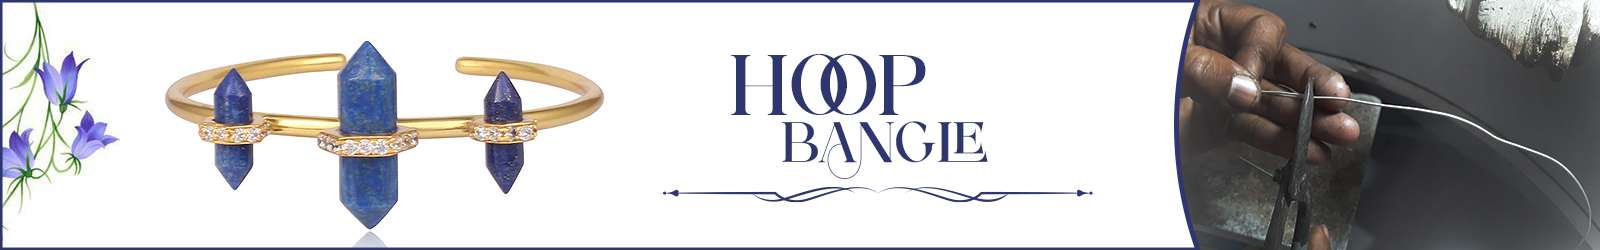 Hoop Bangle